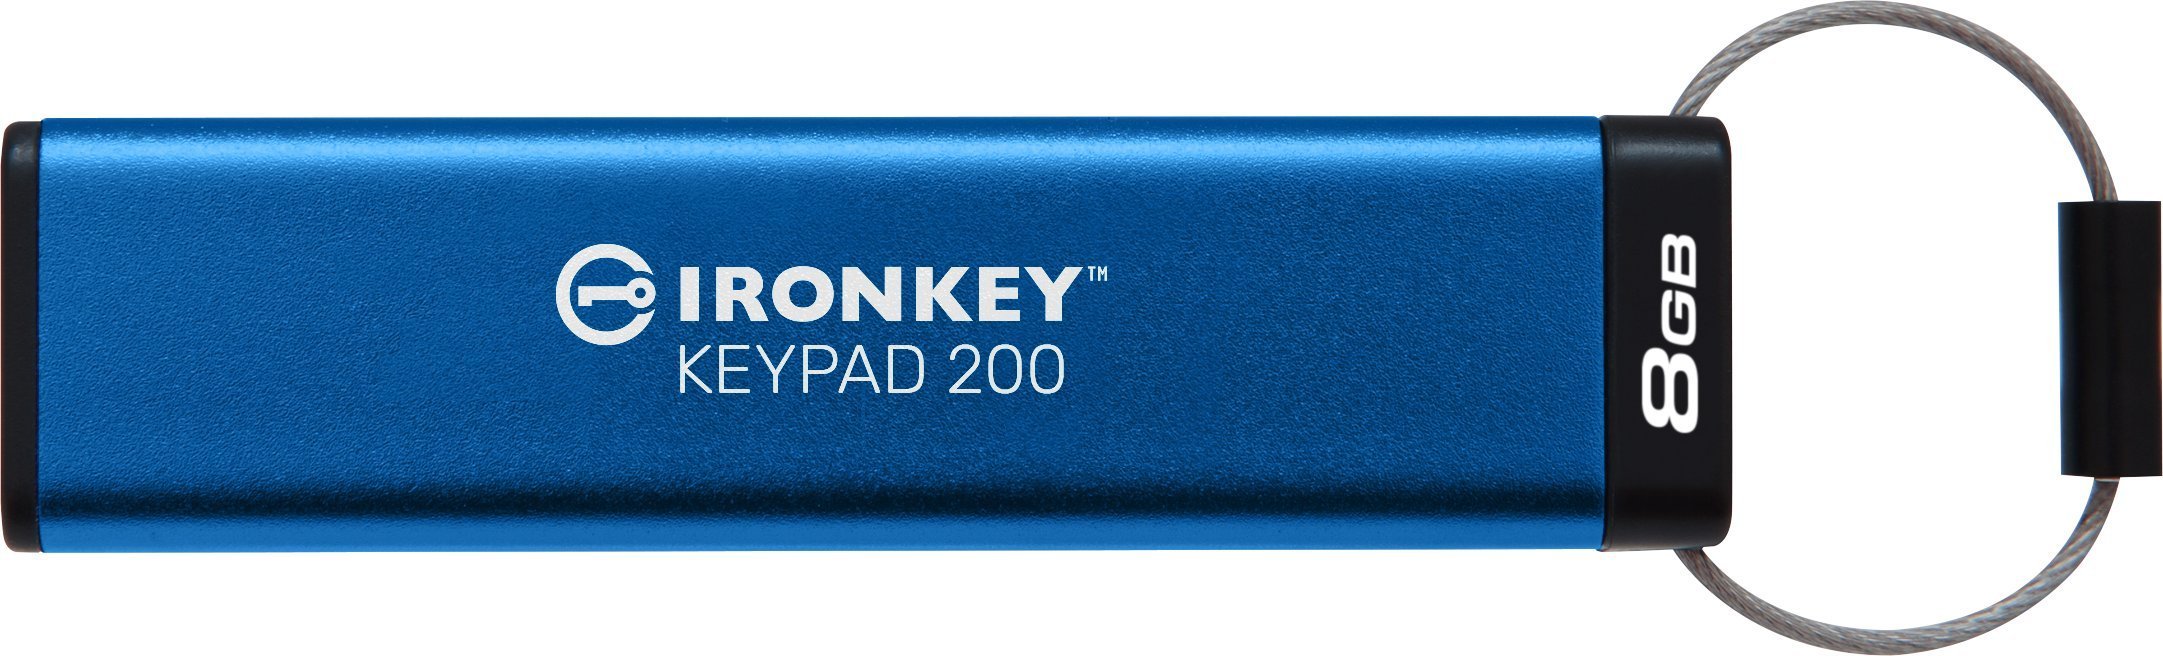 Kingston IronKey Keypad 200 Pen Drive 8GB (IKKP200/8GB)